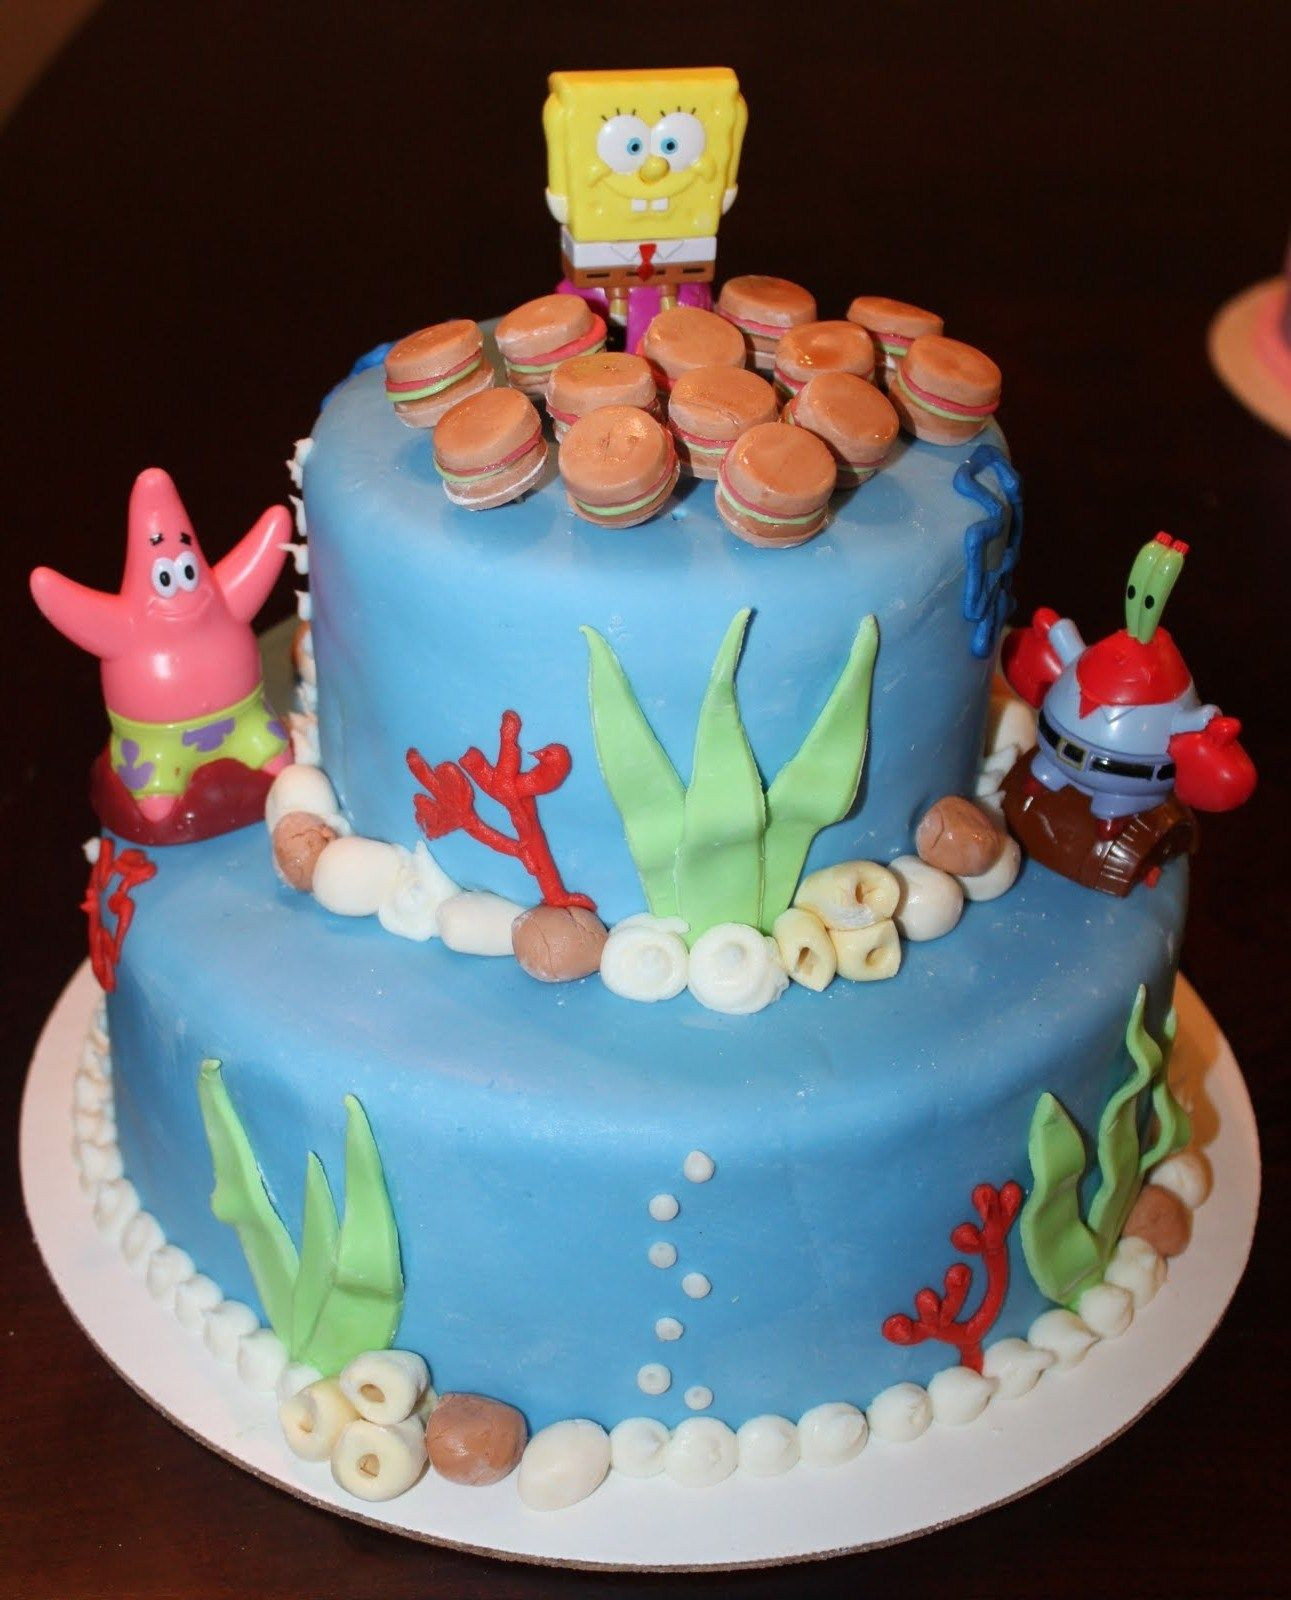 Kroger Birthday Cake Designs
 25 creative picture of kroger bakery birthday cakes